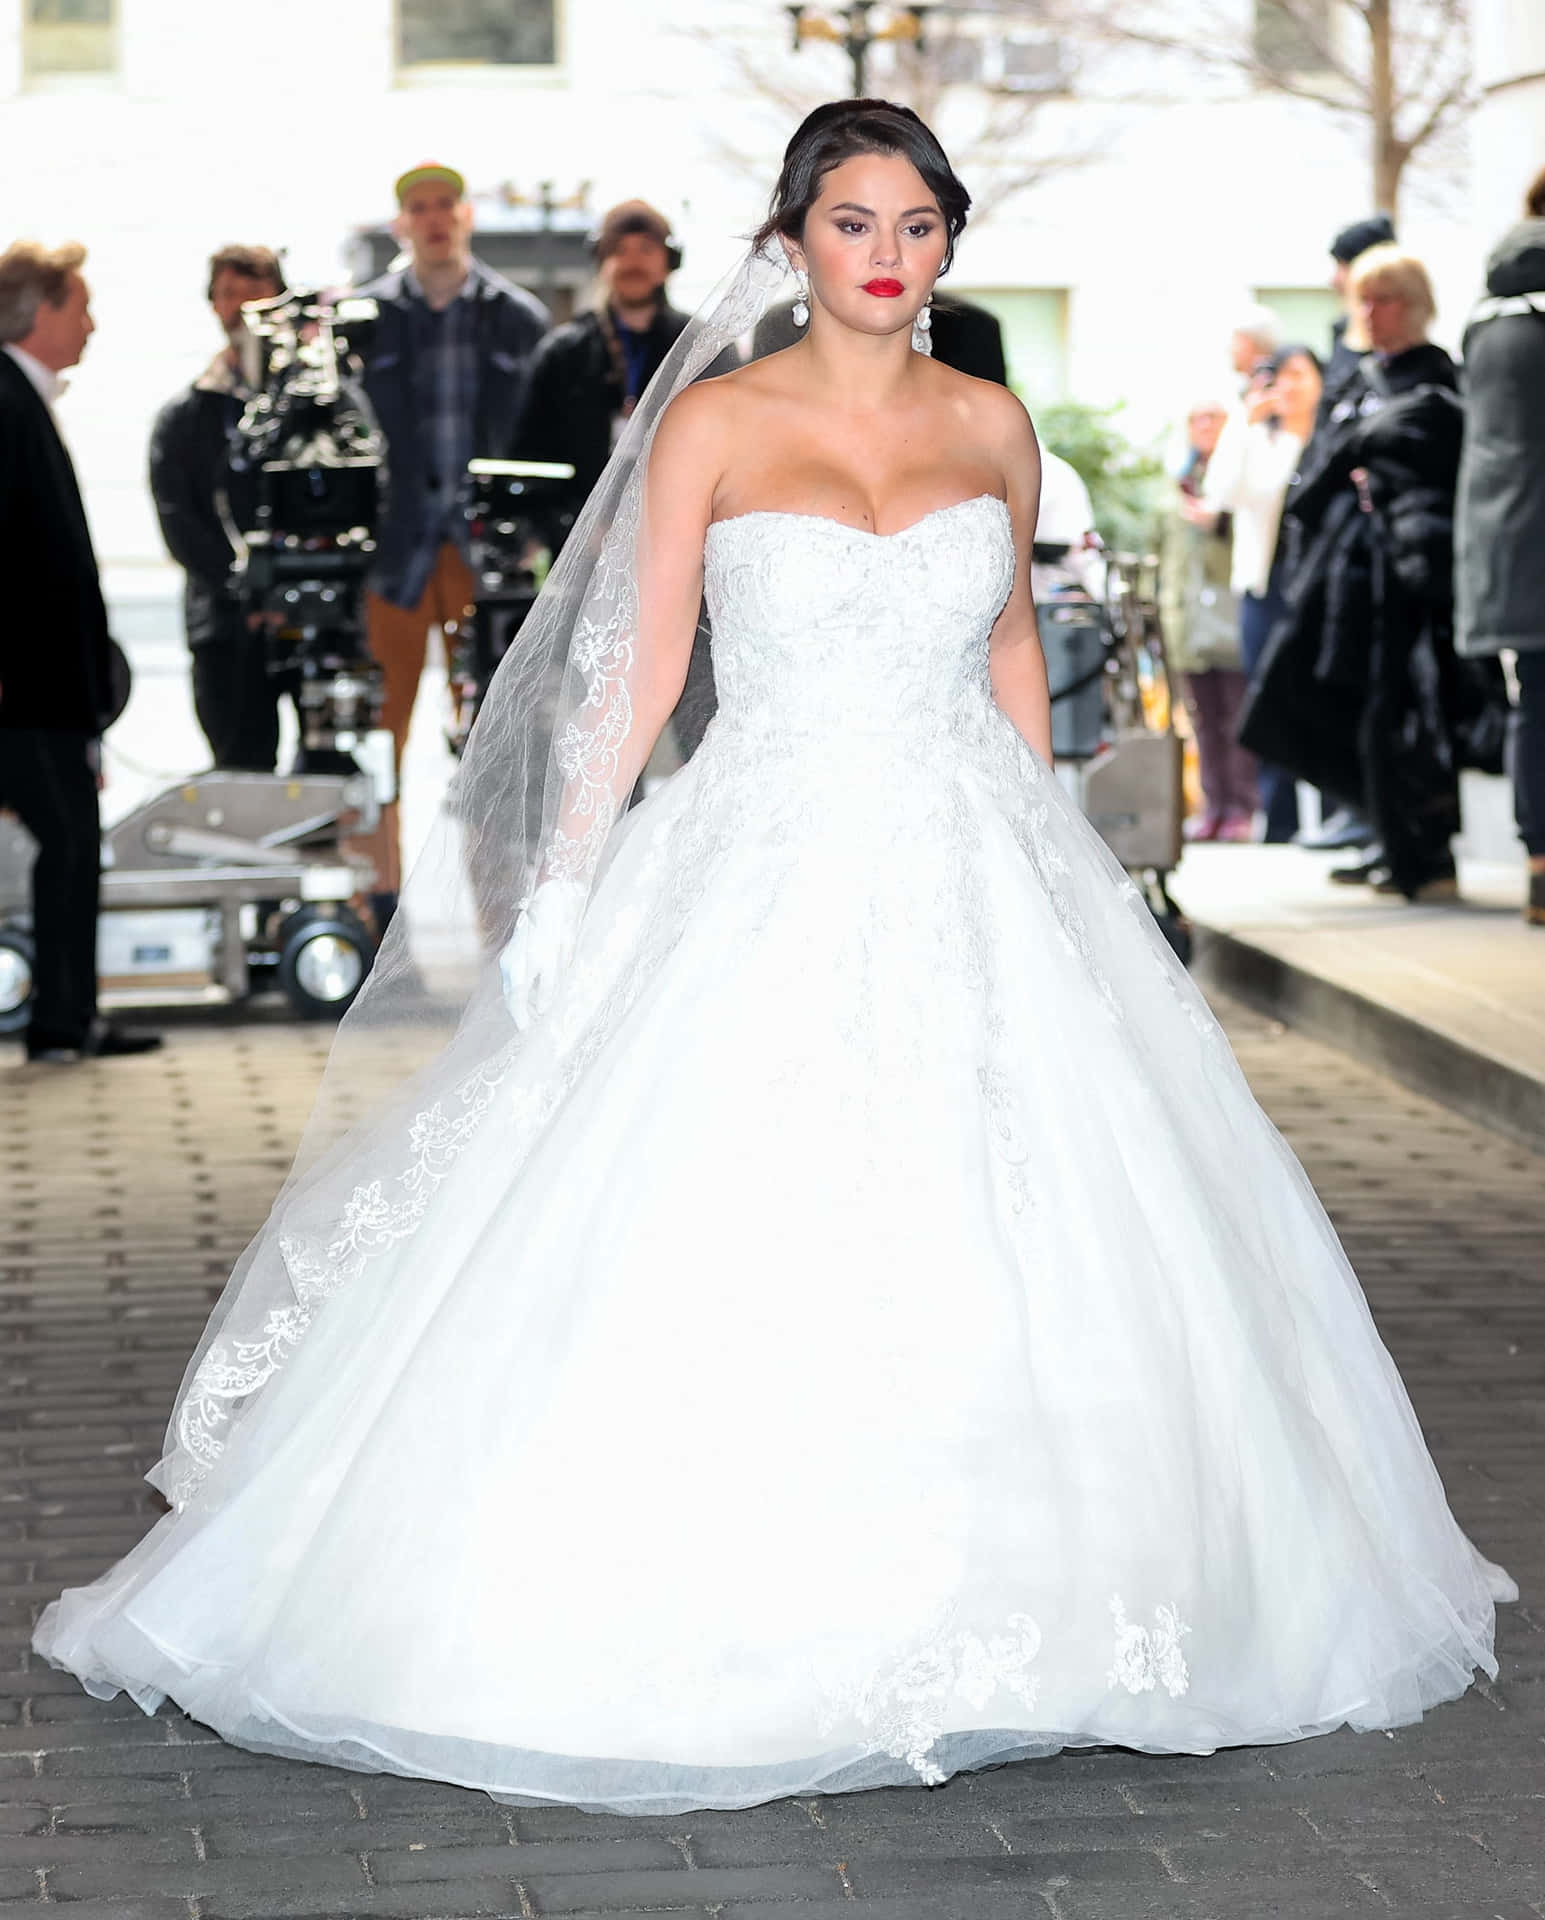 "A beautiful Bride in an unforgettable Dress"! Wallpaper